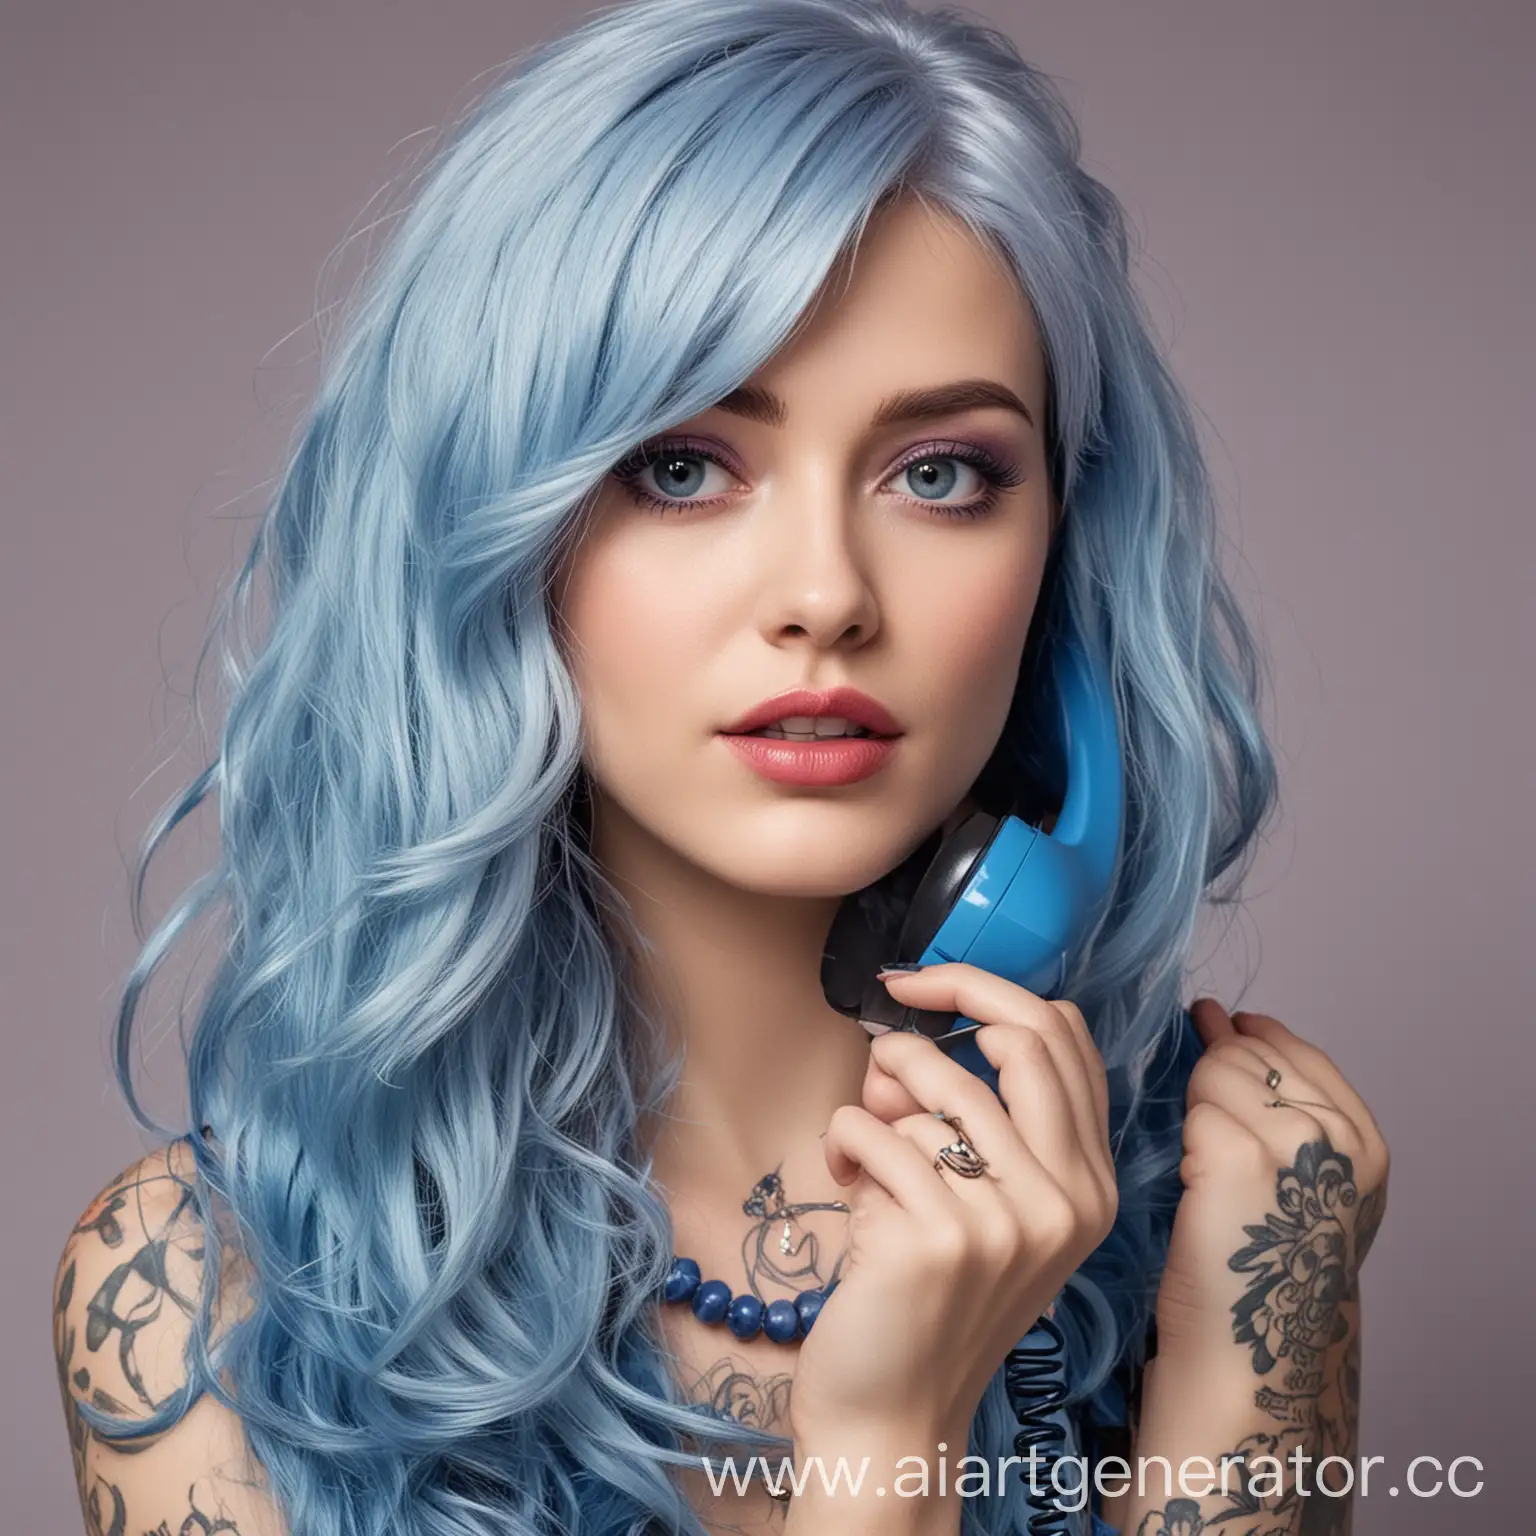 Malvina-with-Blue-Hair-Making-a-Phone-Call